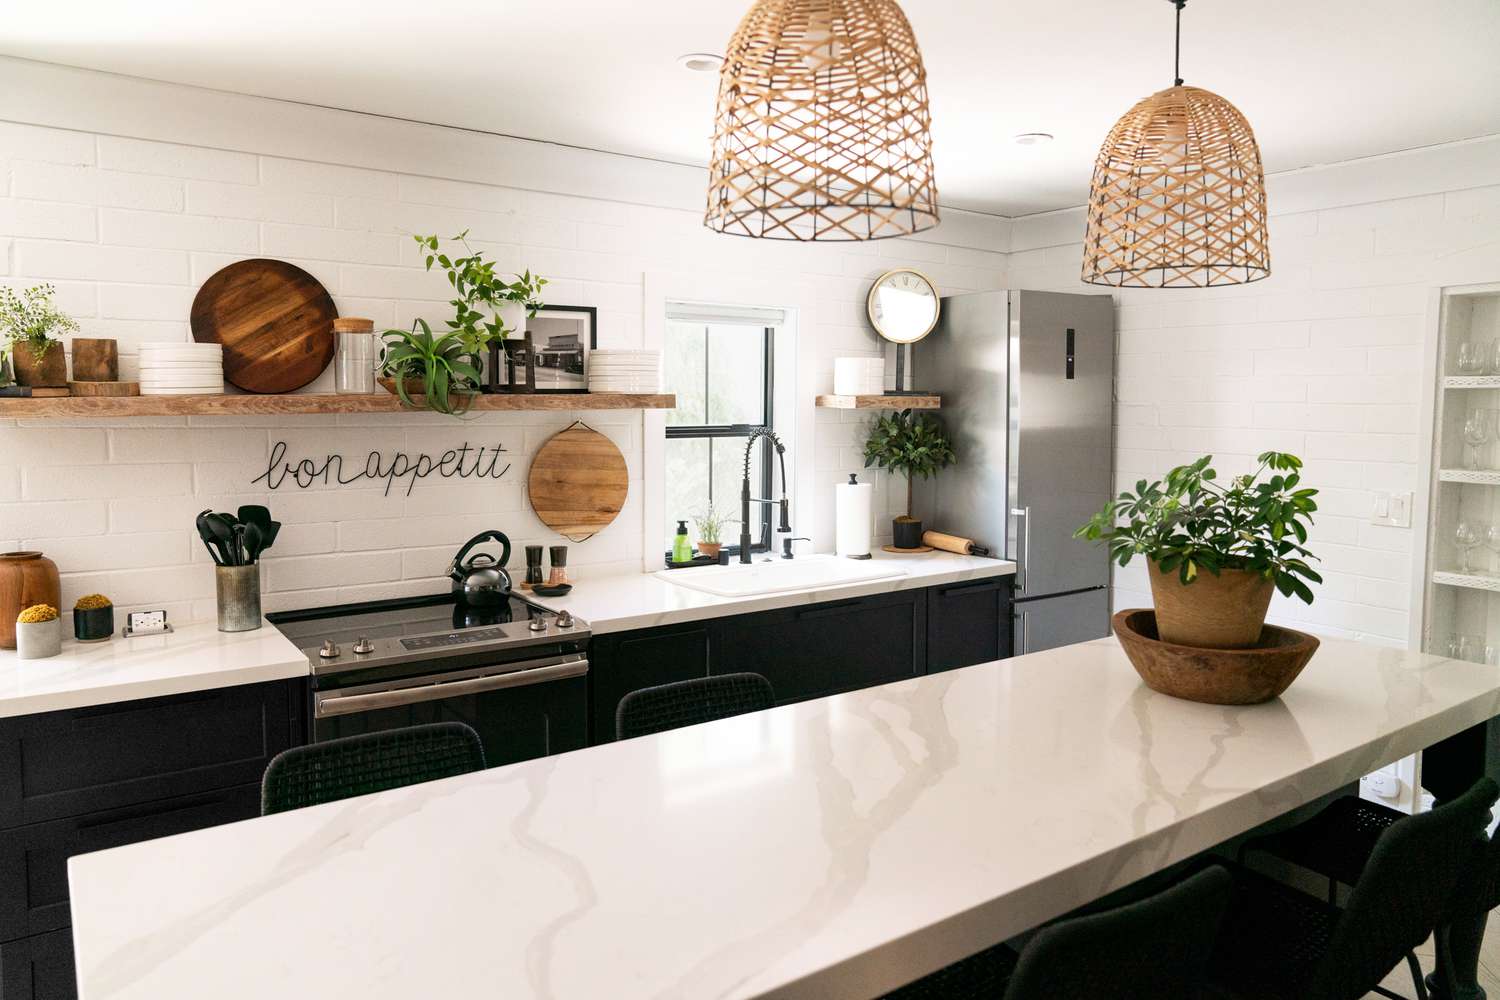 Farmhouse kitchen ideas – 36 beautiful ways to introduce modern rustic elements